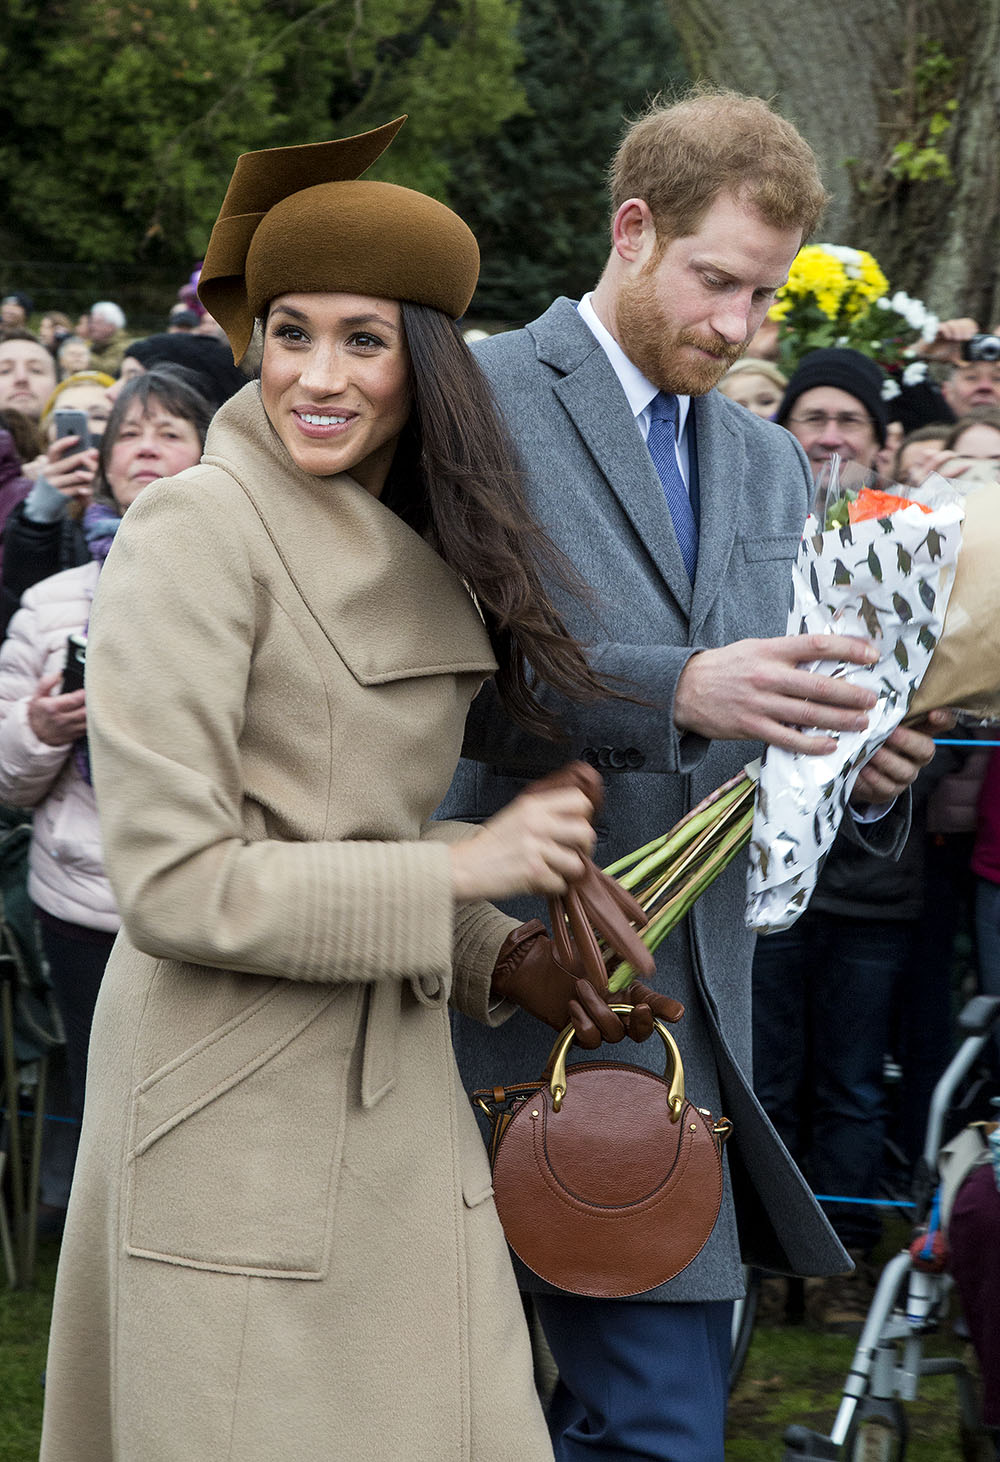 Prince Harry & Meghan Markle joins the Royal family at Sandringham on Christmas Day